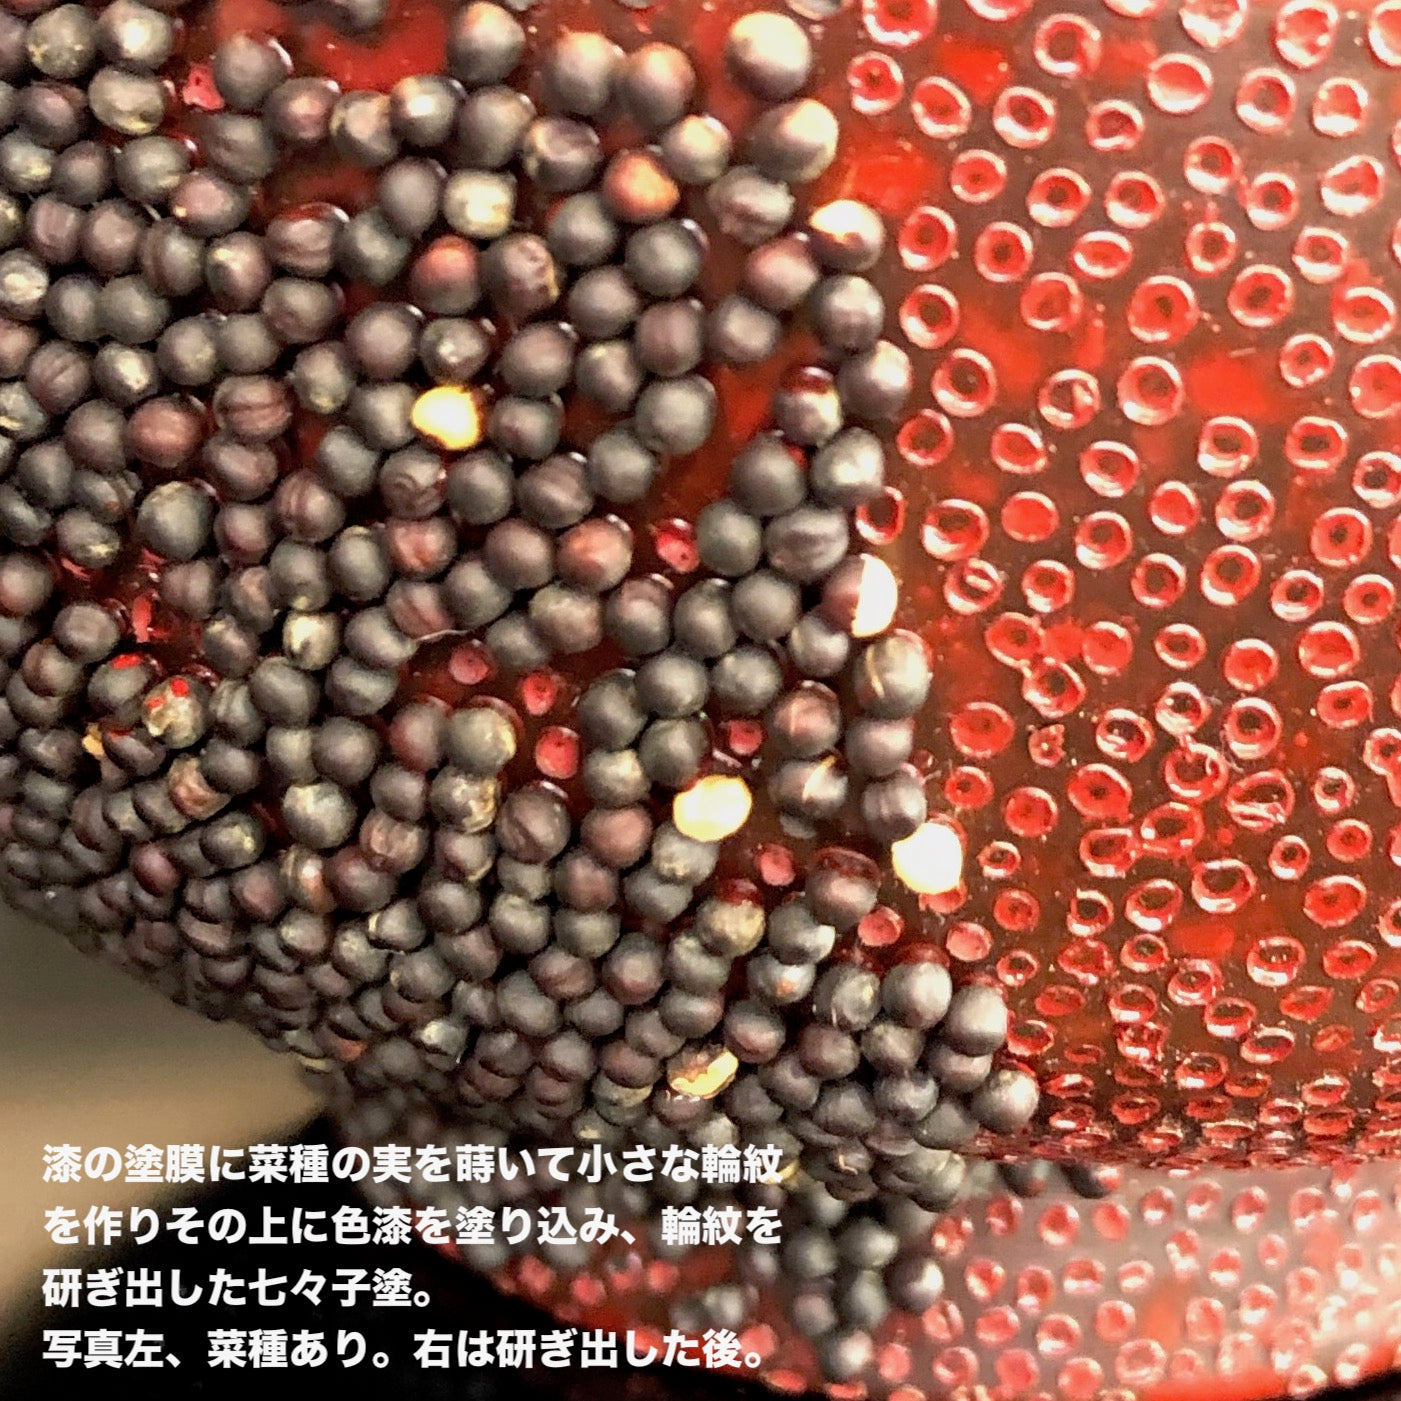 大阪浪華錫器タンブラー | 津軽仕上げ  微粒面 |  赤 | 大阪錫器